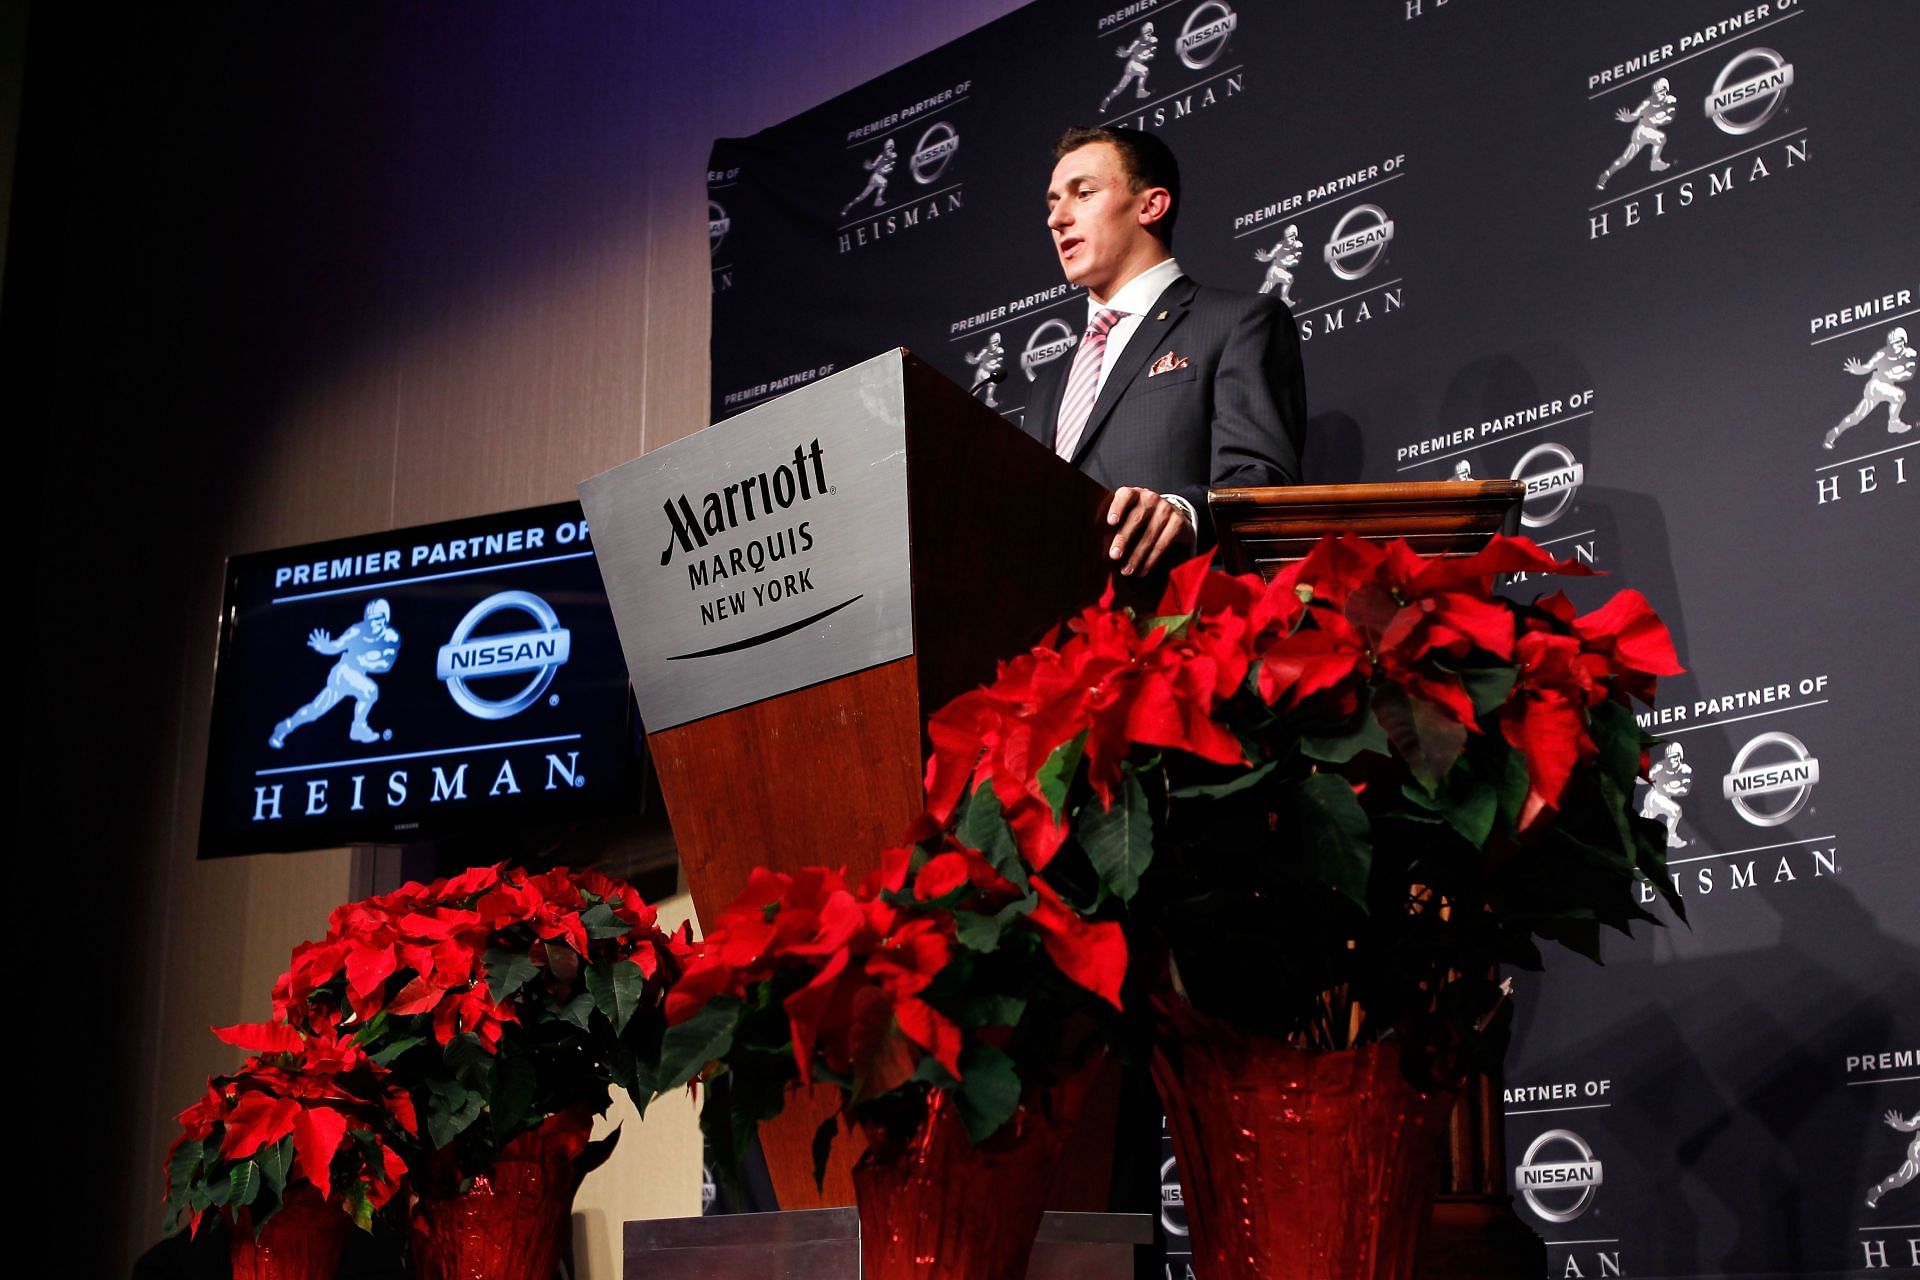 2012 Heisman Trophy Presentation